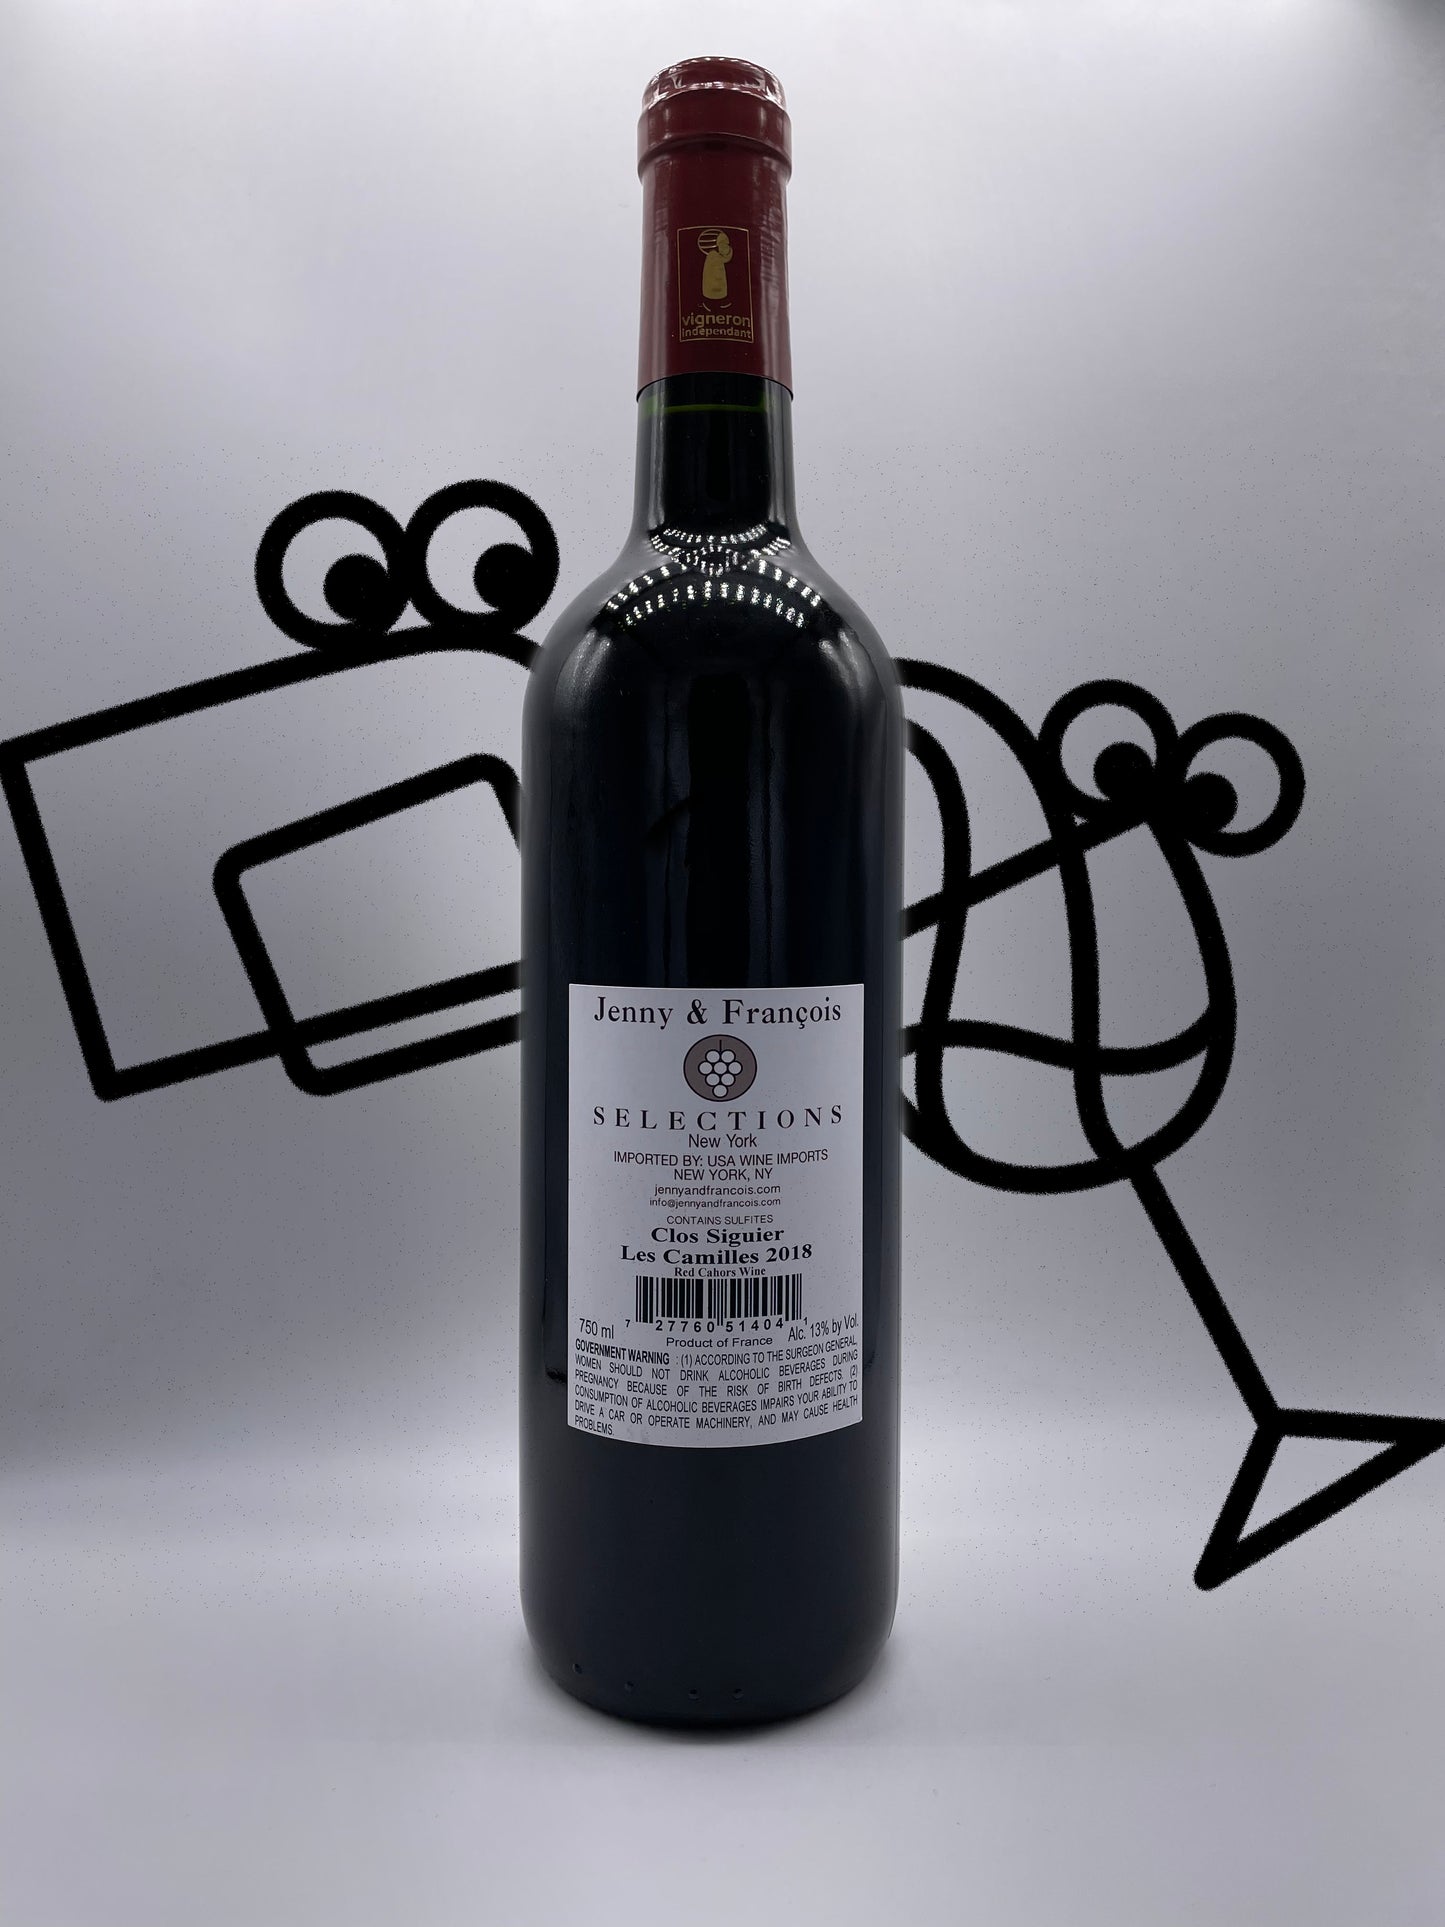 Clos Siguier 'Les Camilles' Malbec Cahors, France - Williston Park Wines & Spirits